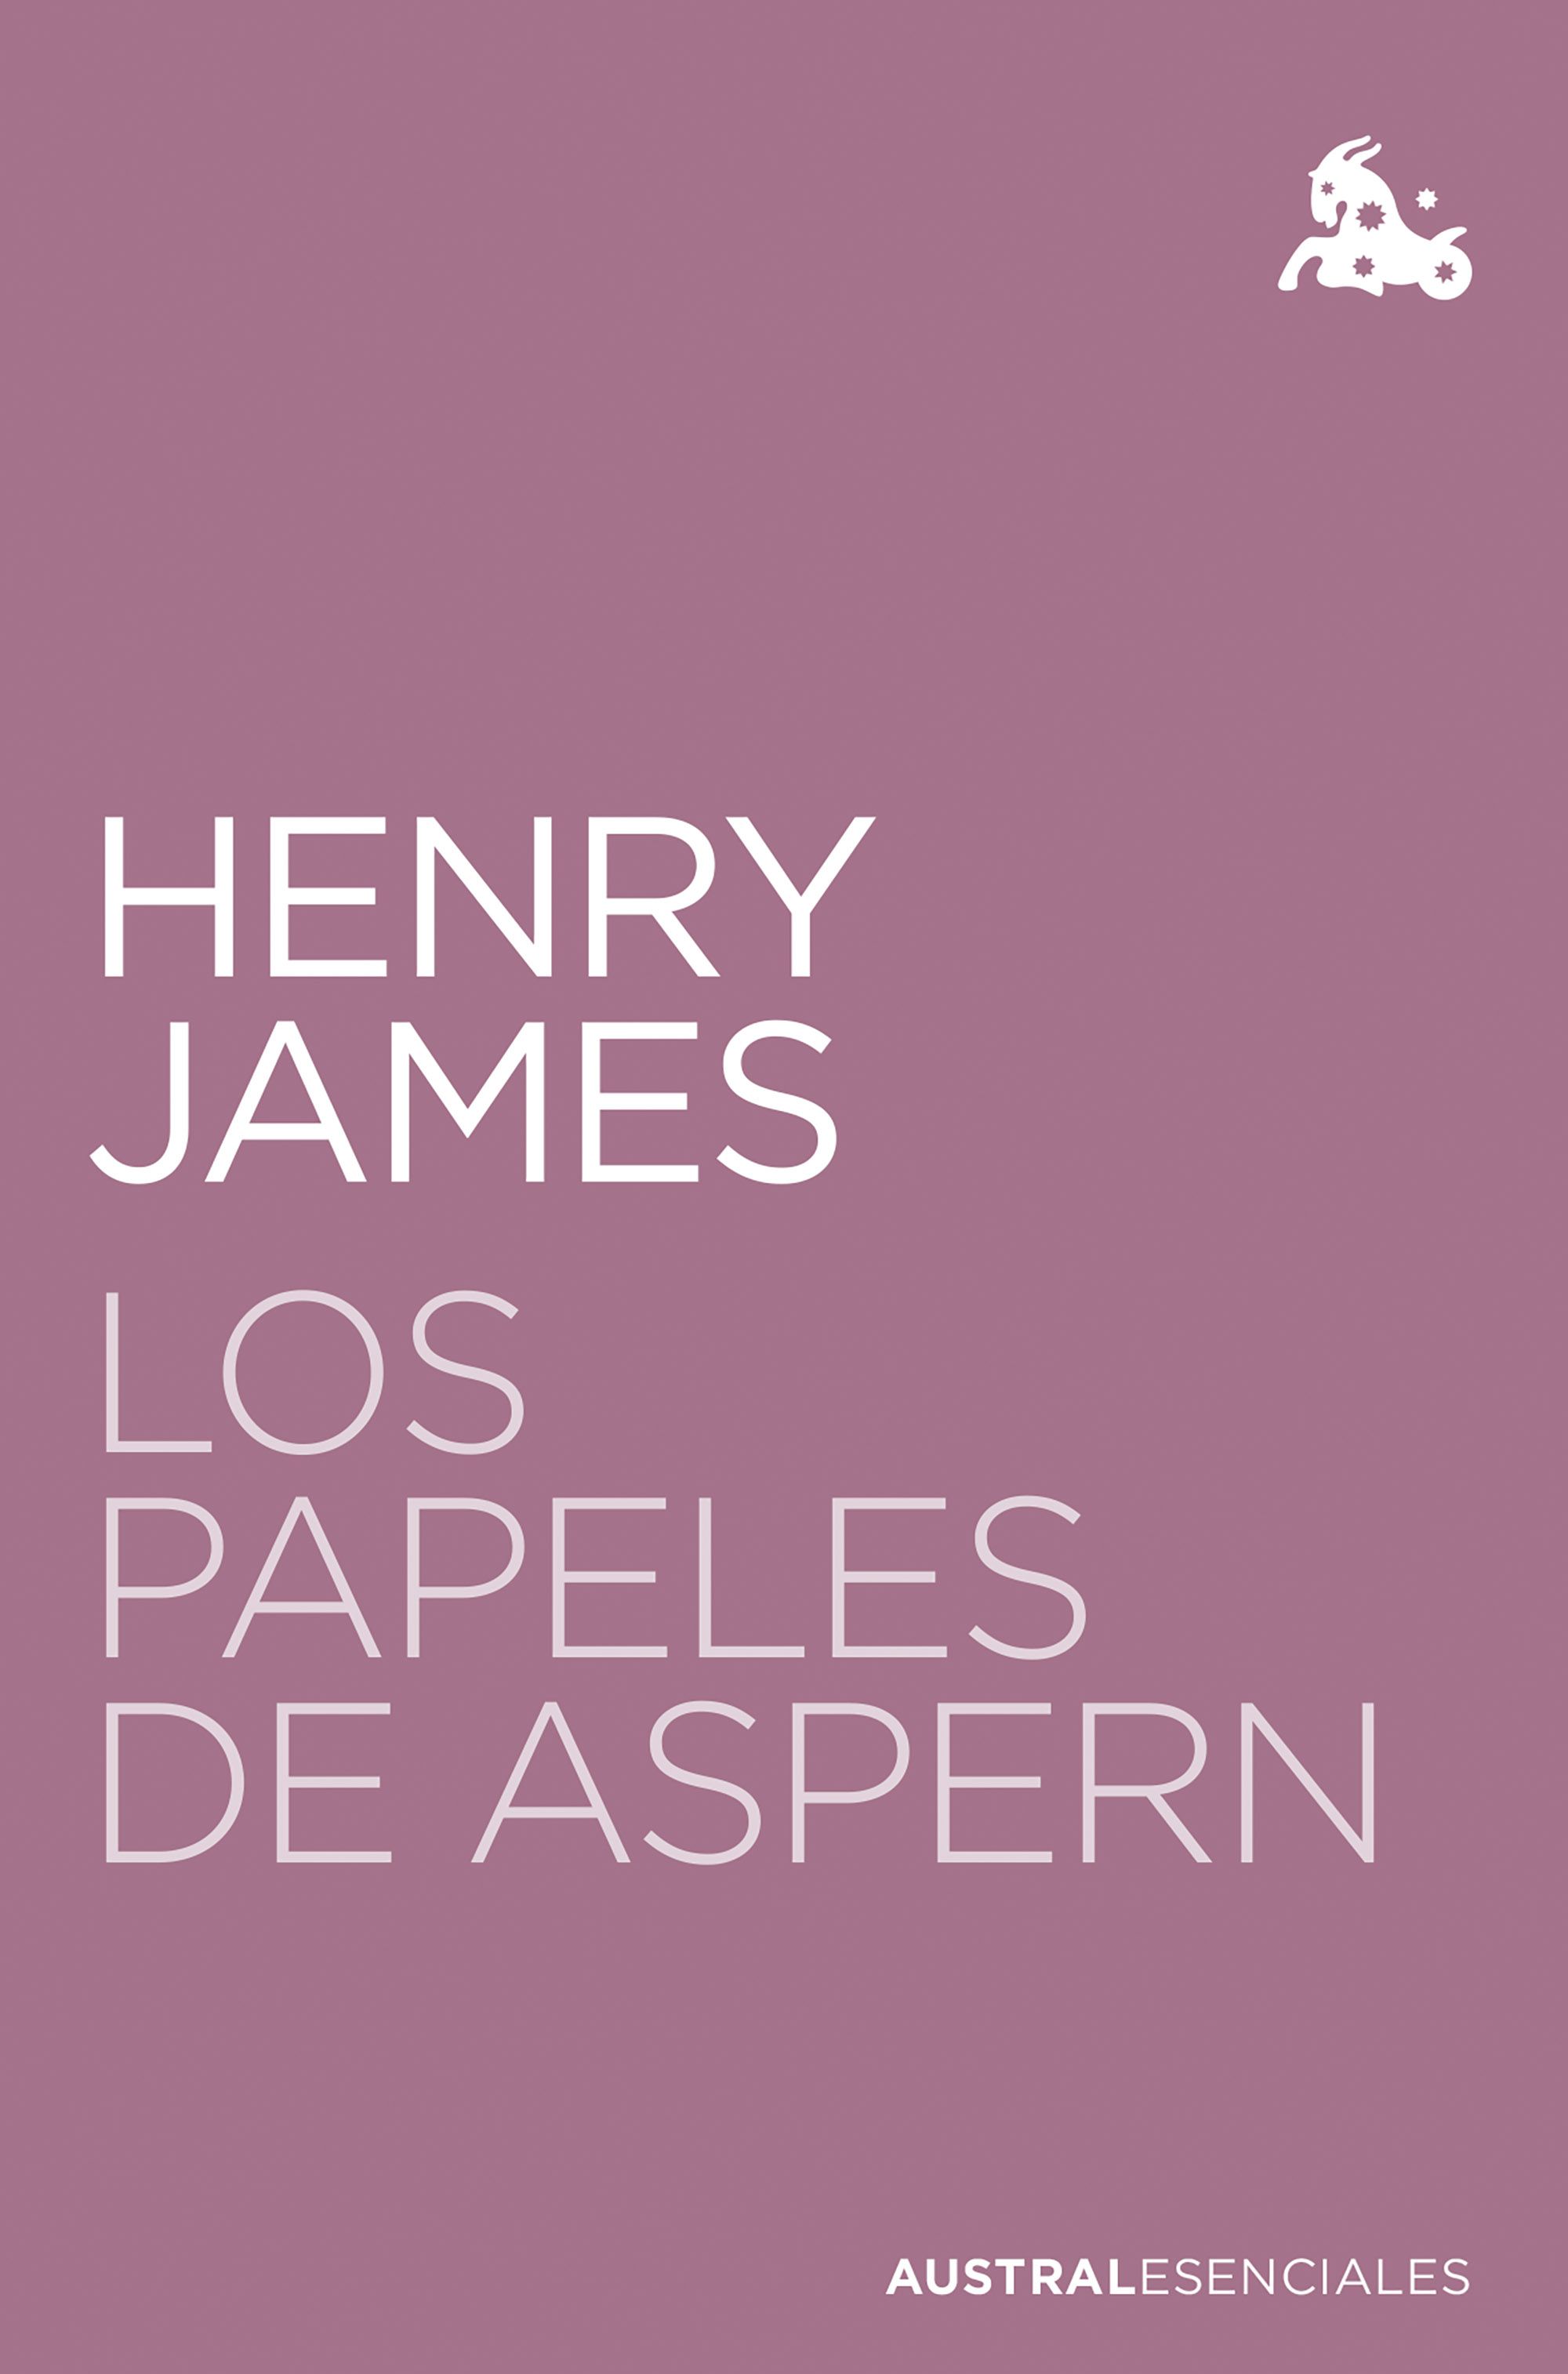 flota conocido conspiración Los papeles de Aspern - Henry James | PlanetadeLibros